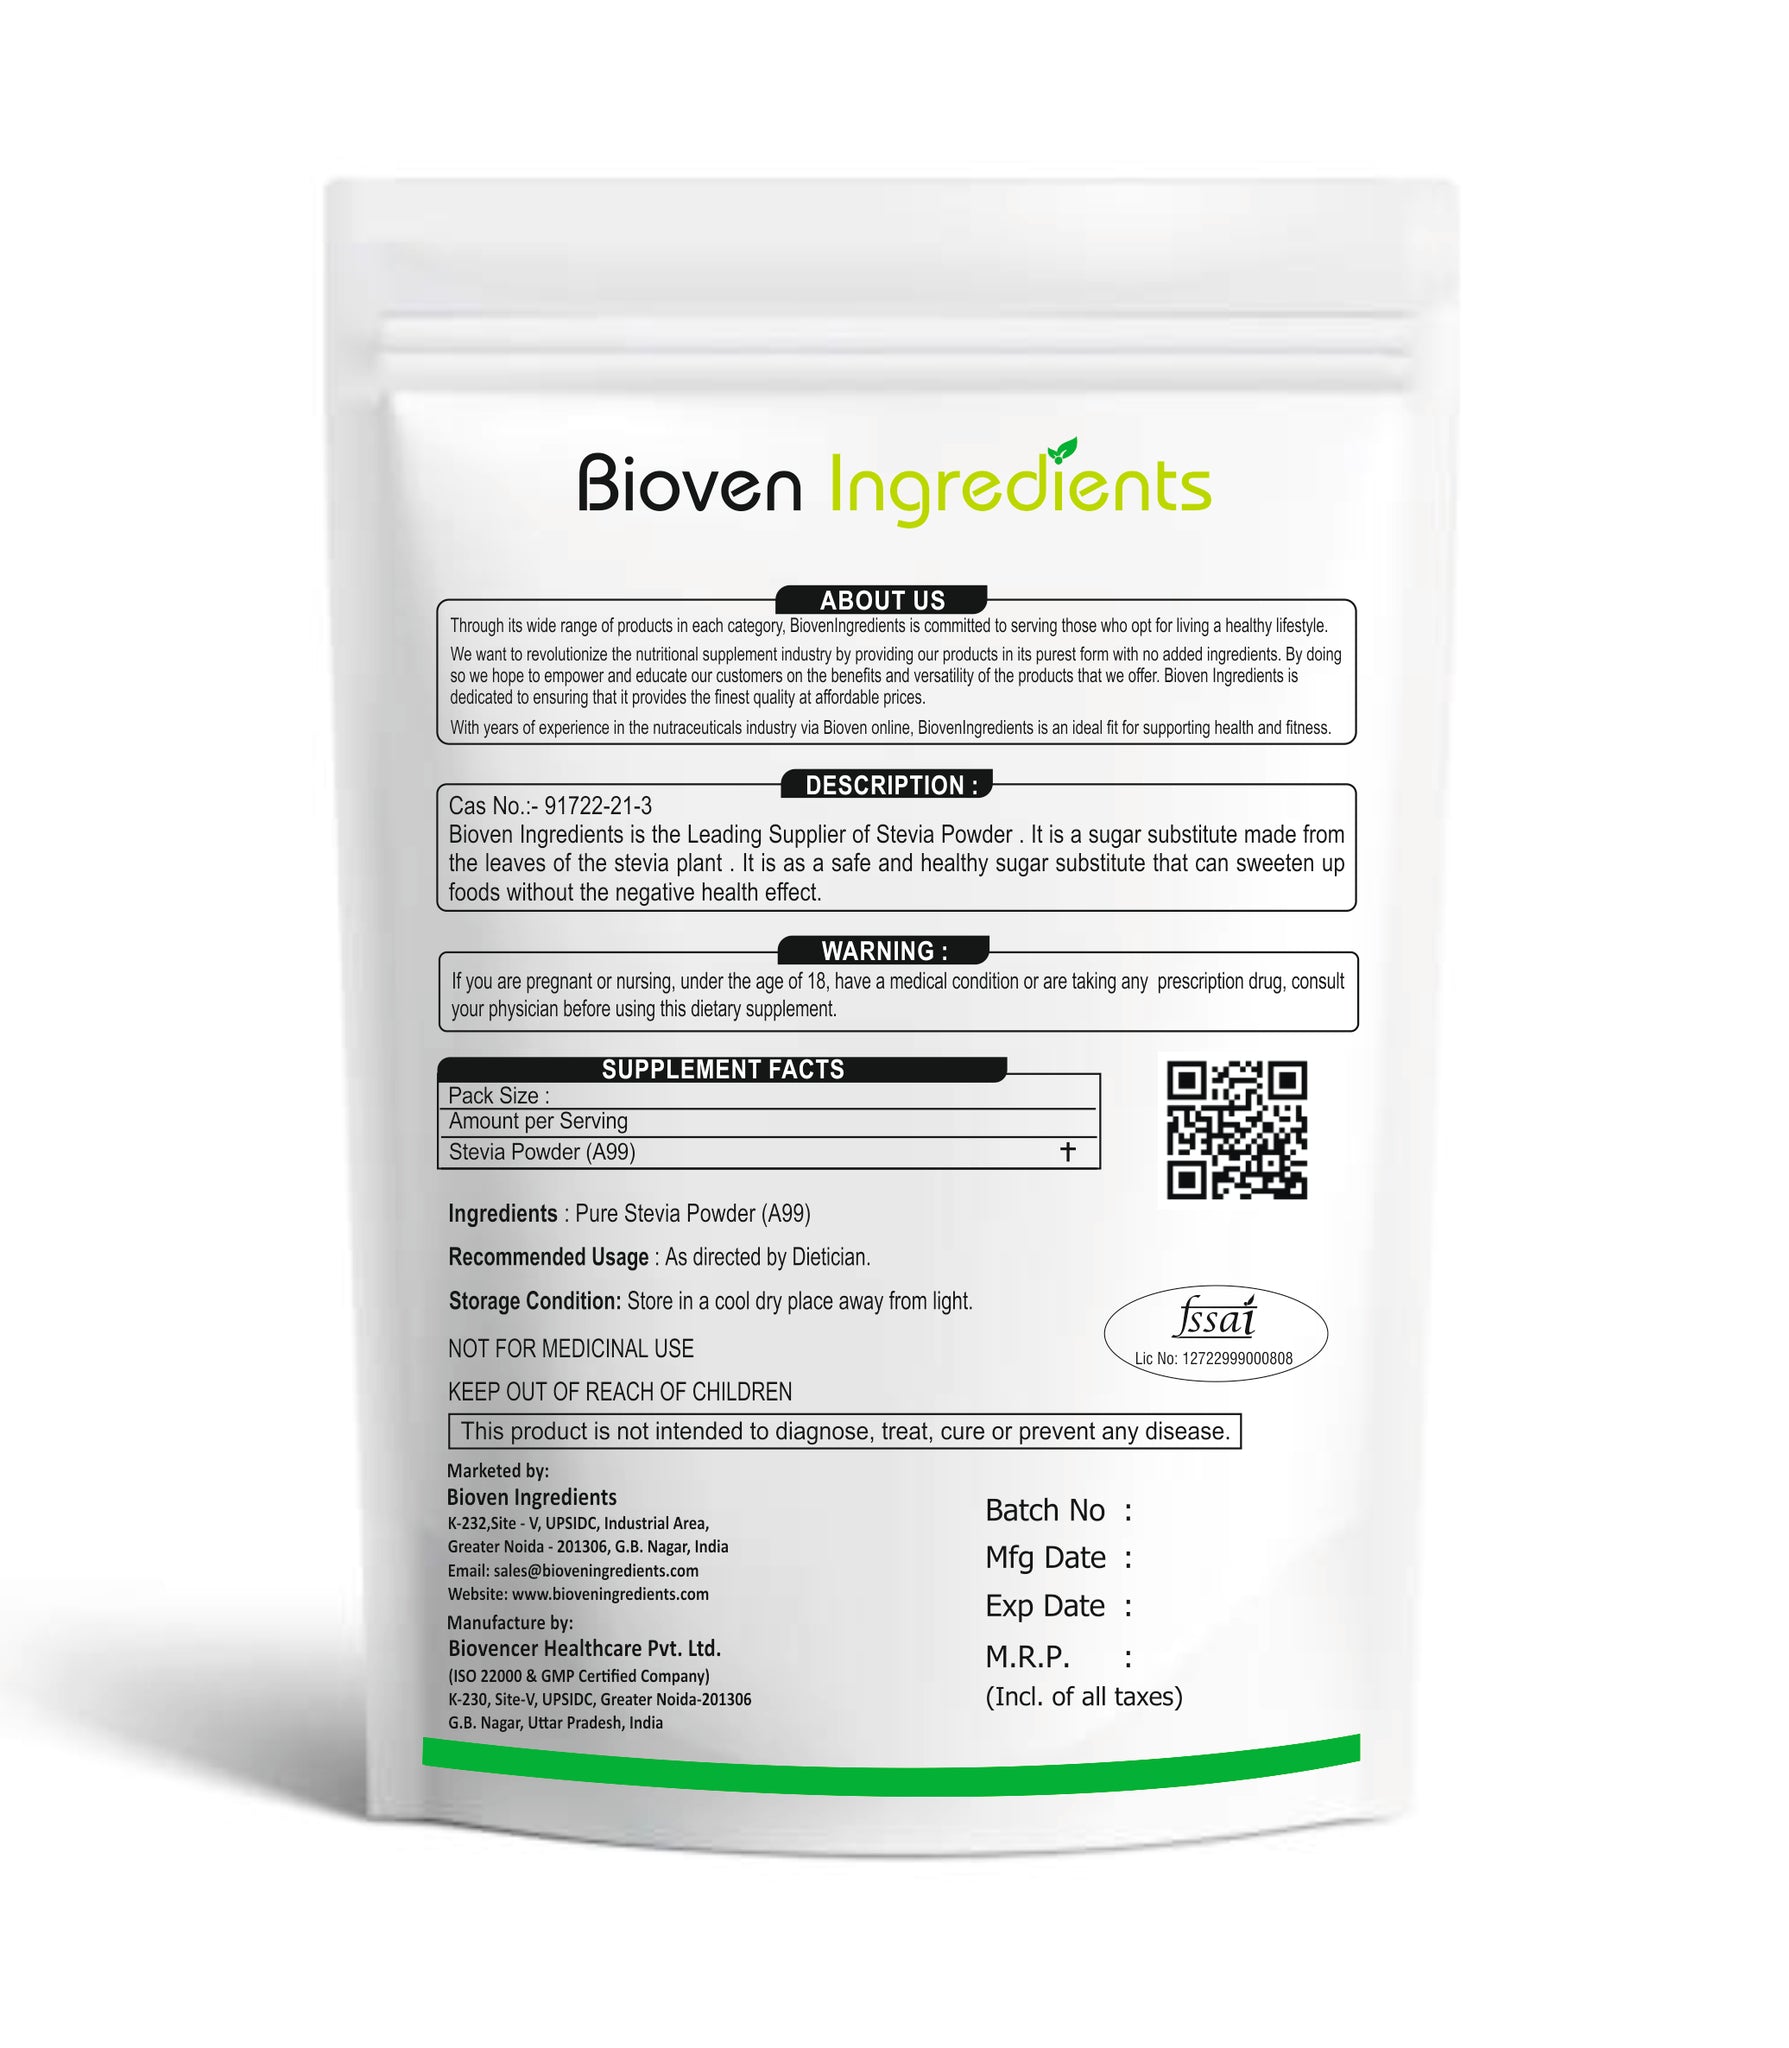 Buy Stevia powder( A99) online at Bioven Ingredients